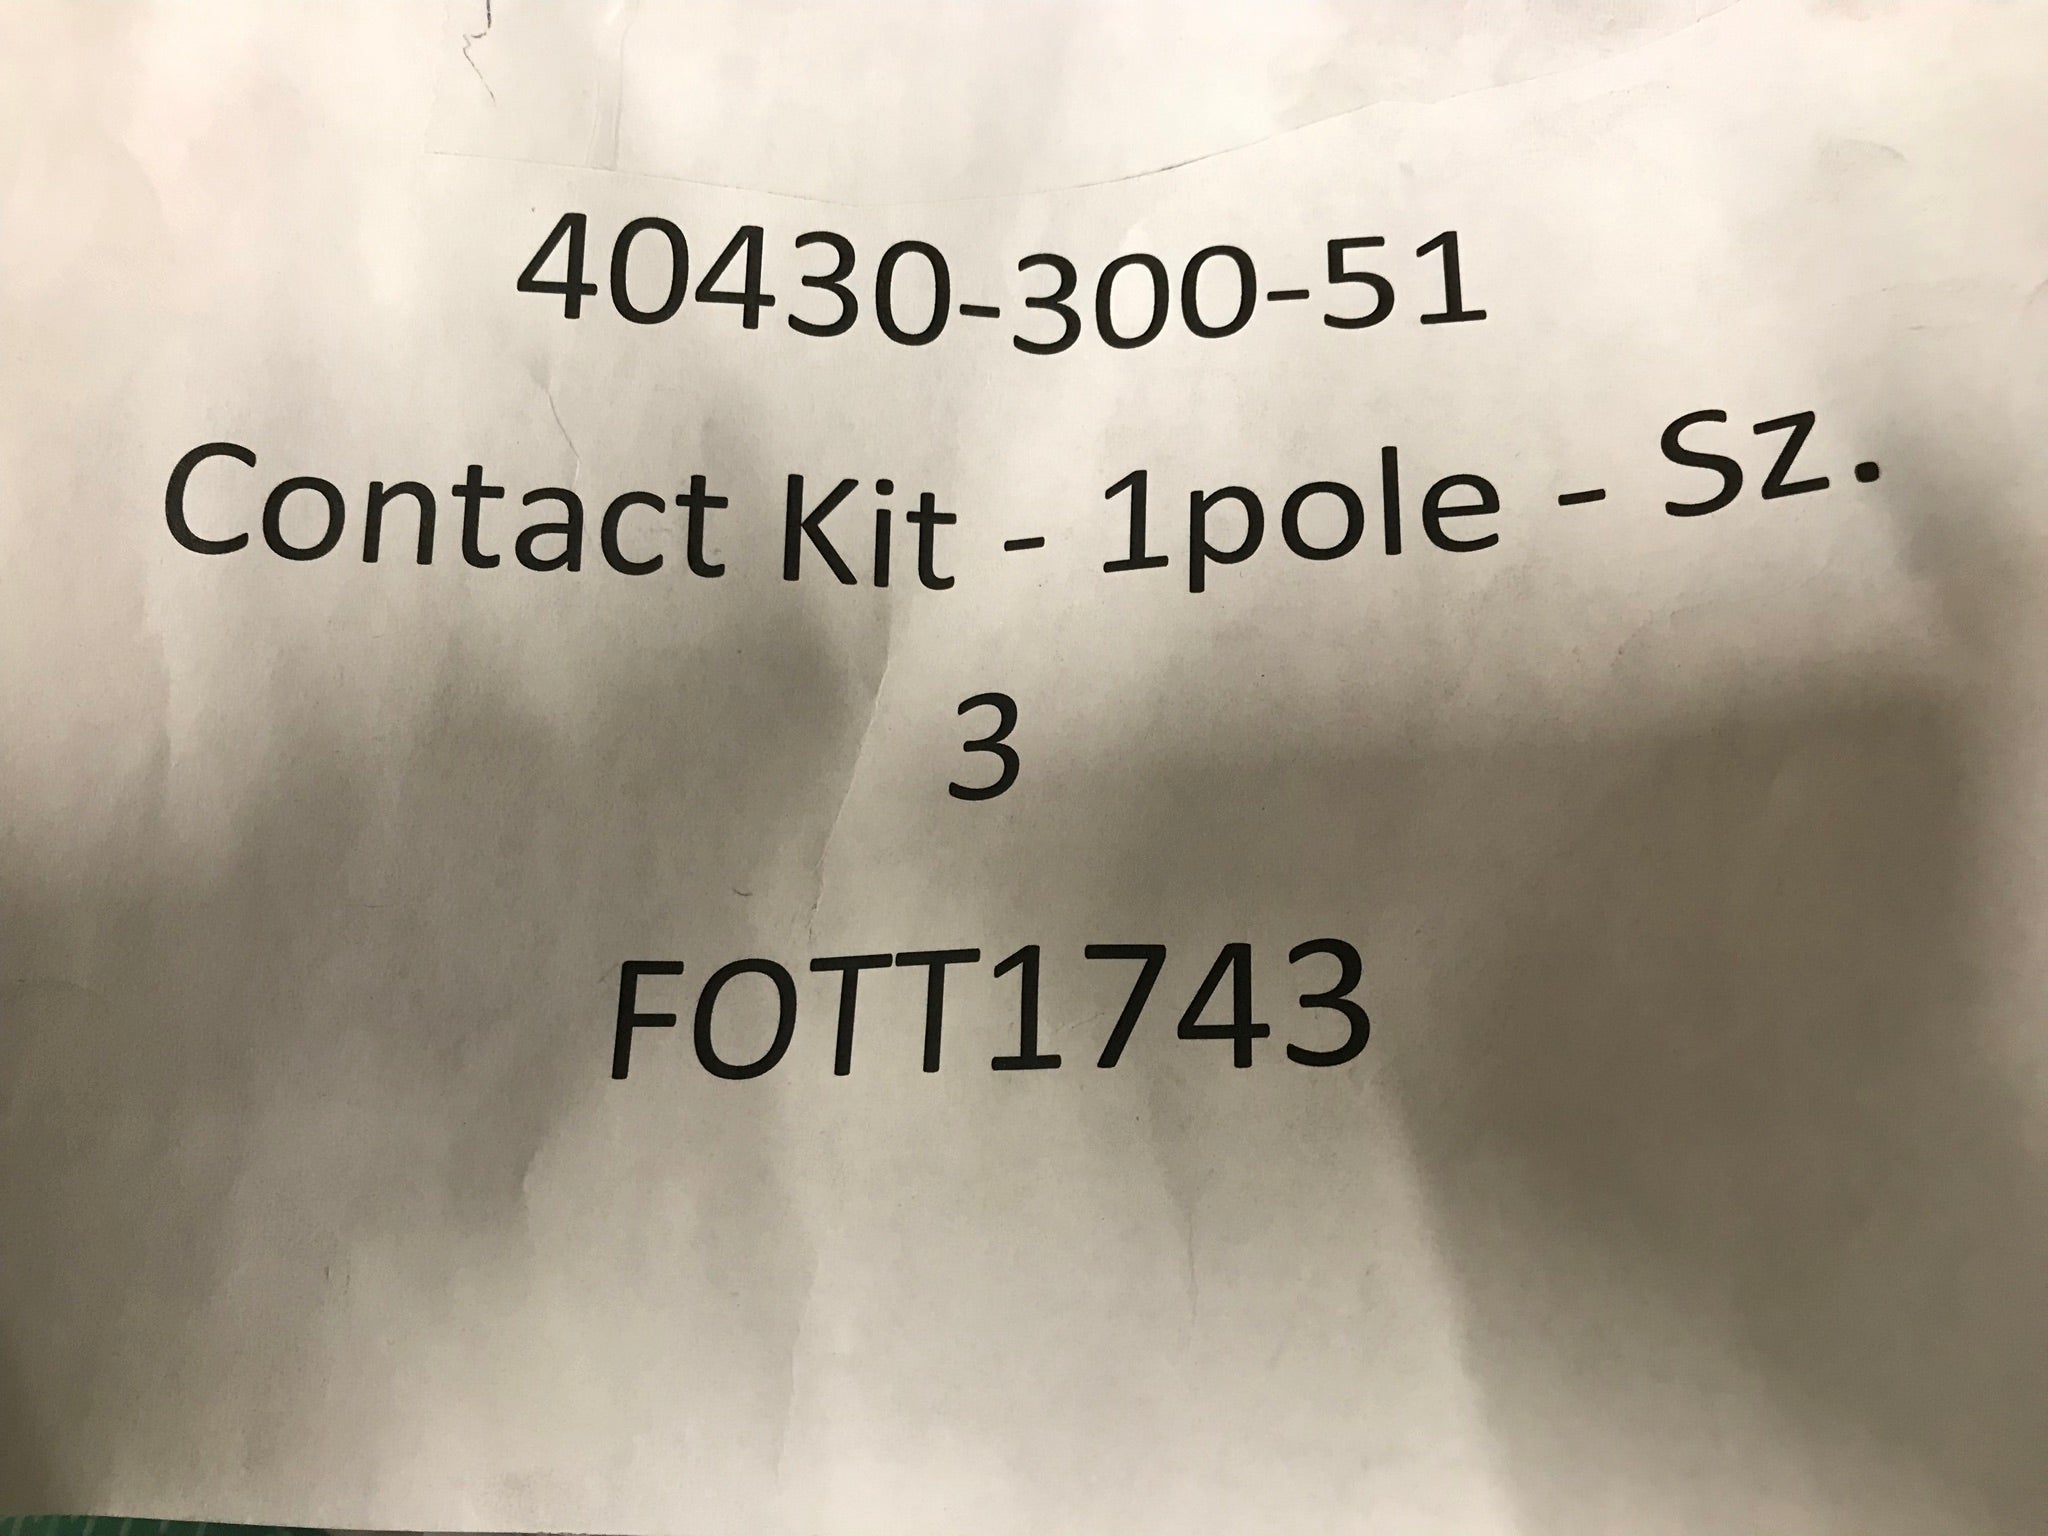 Contact Kit - 1pole - Sz. 3